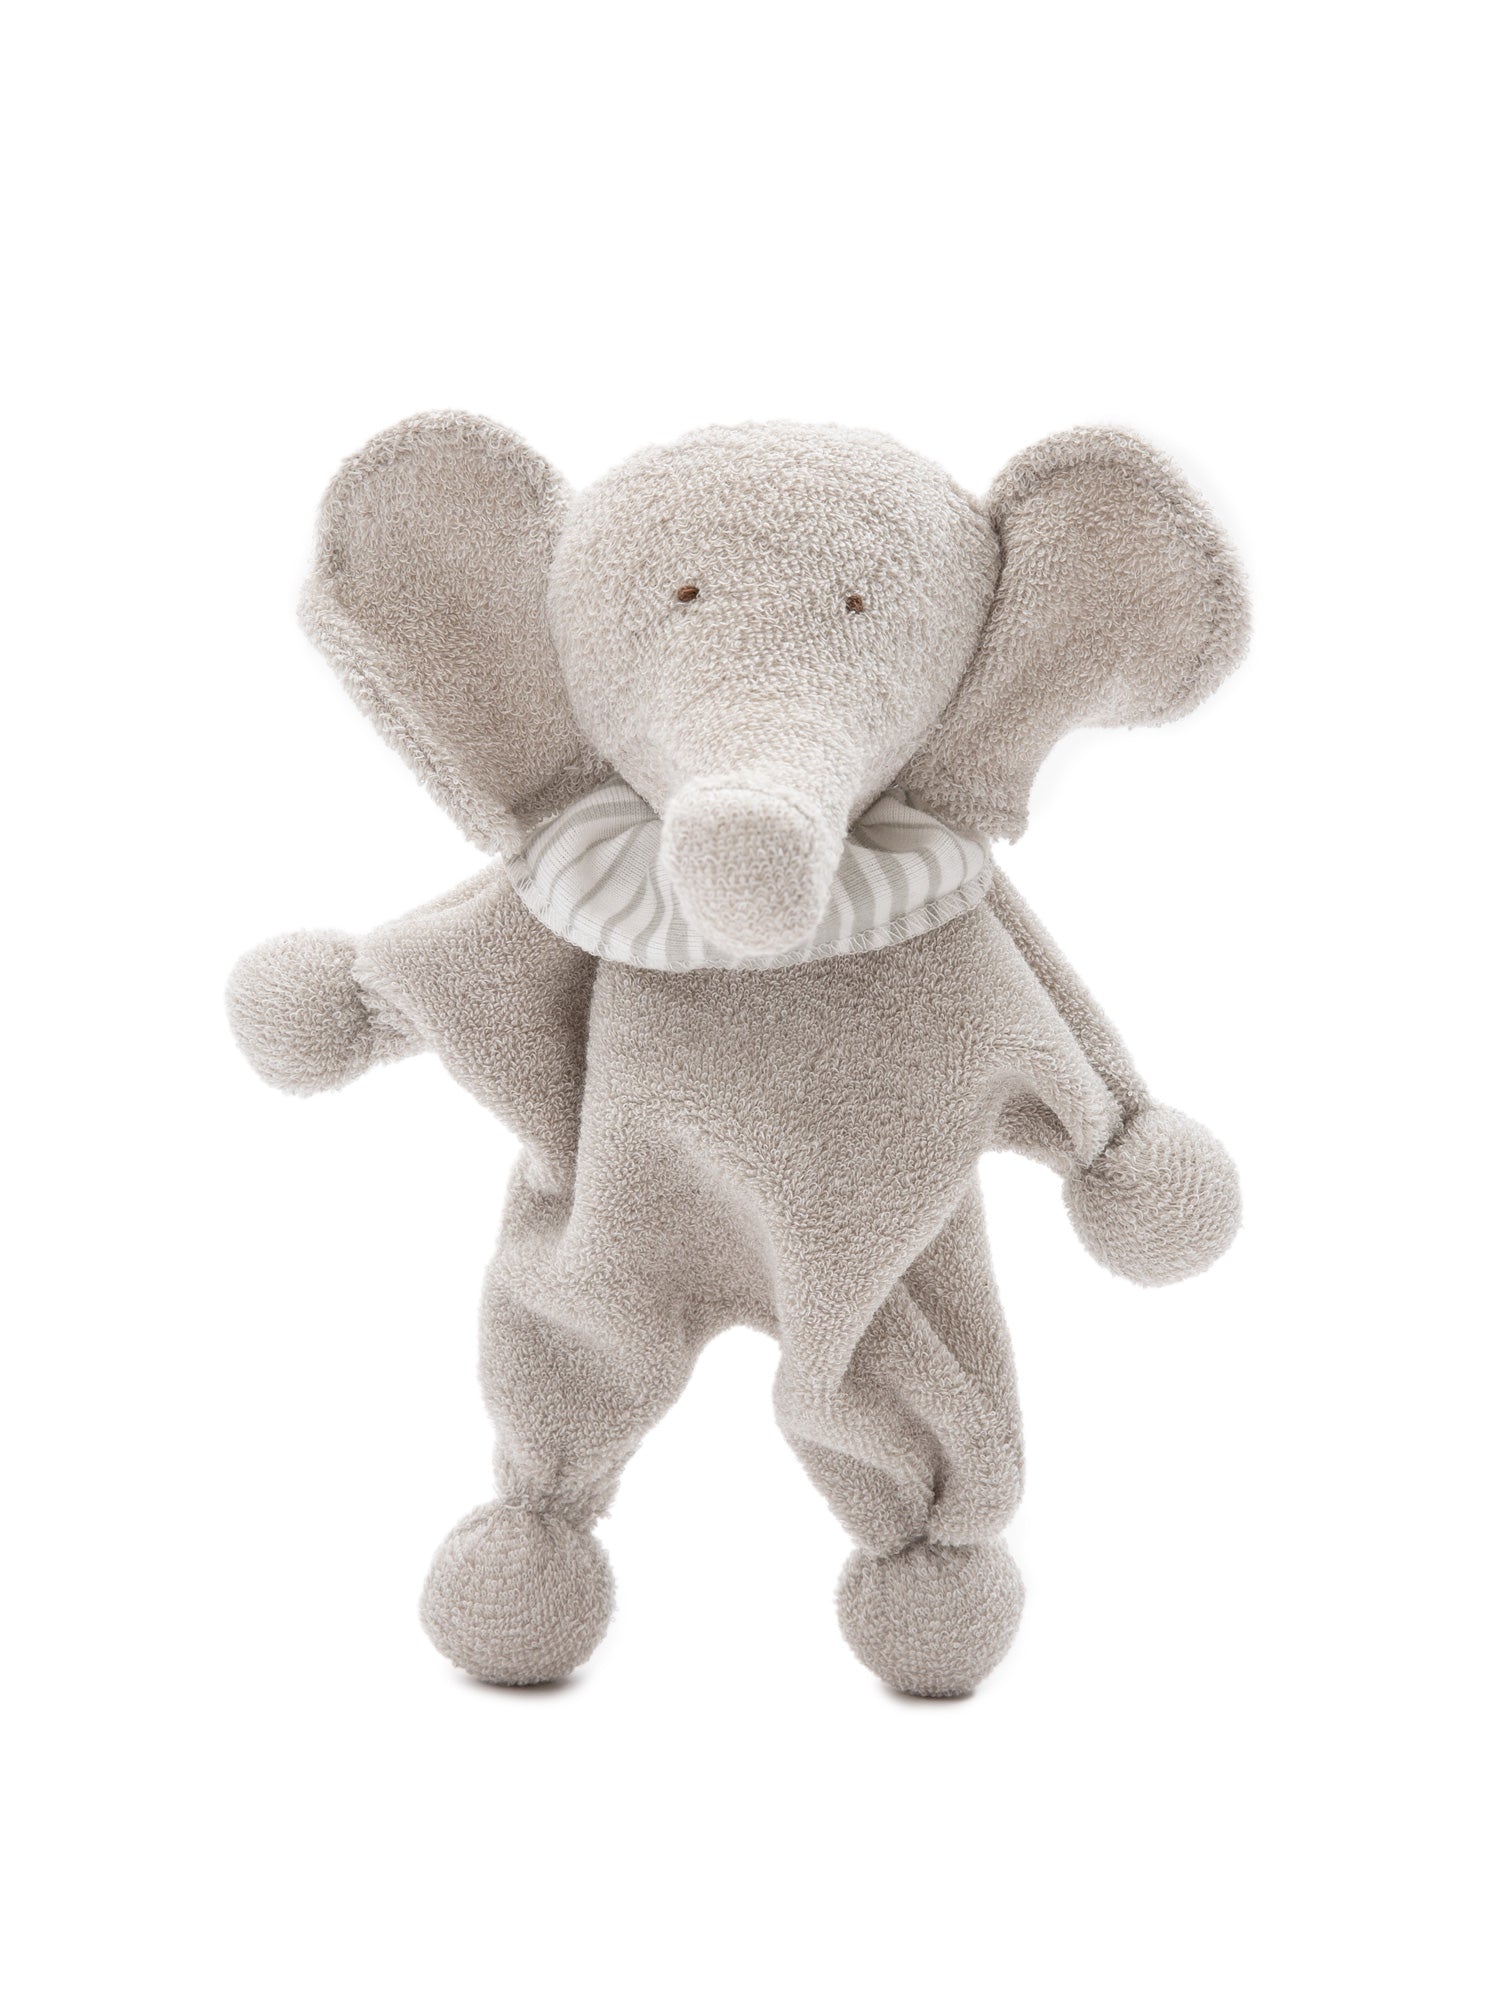 Elephant Lovey - Grey